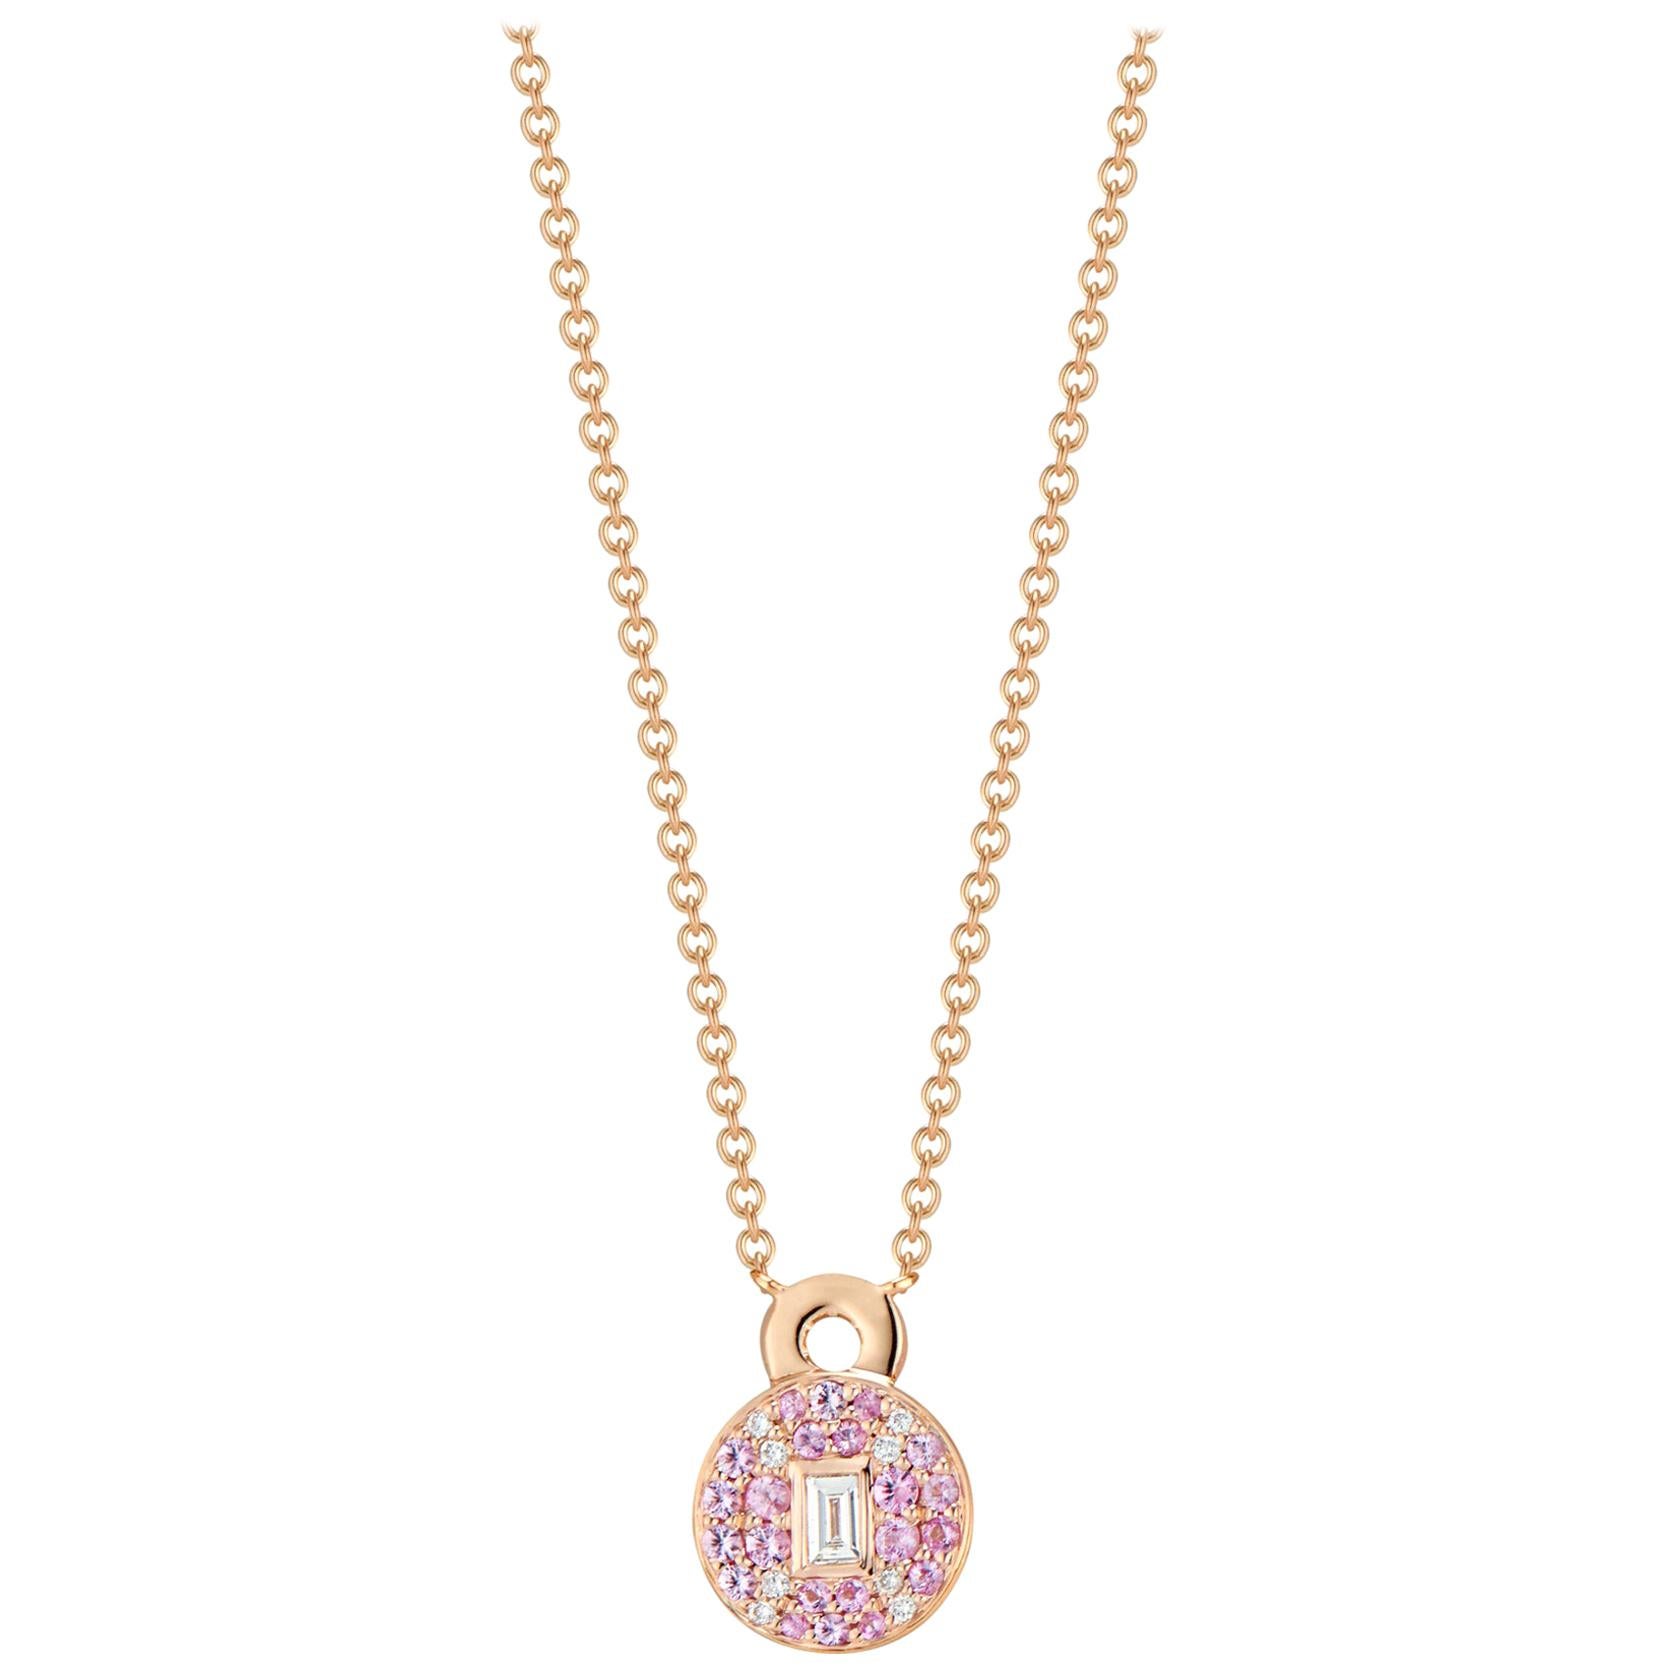 Love Lock Necklace with Pink Sapphires, Pavé Brilliant Cut Diamonds and Baguette